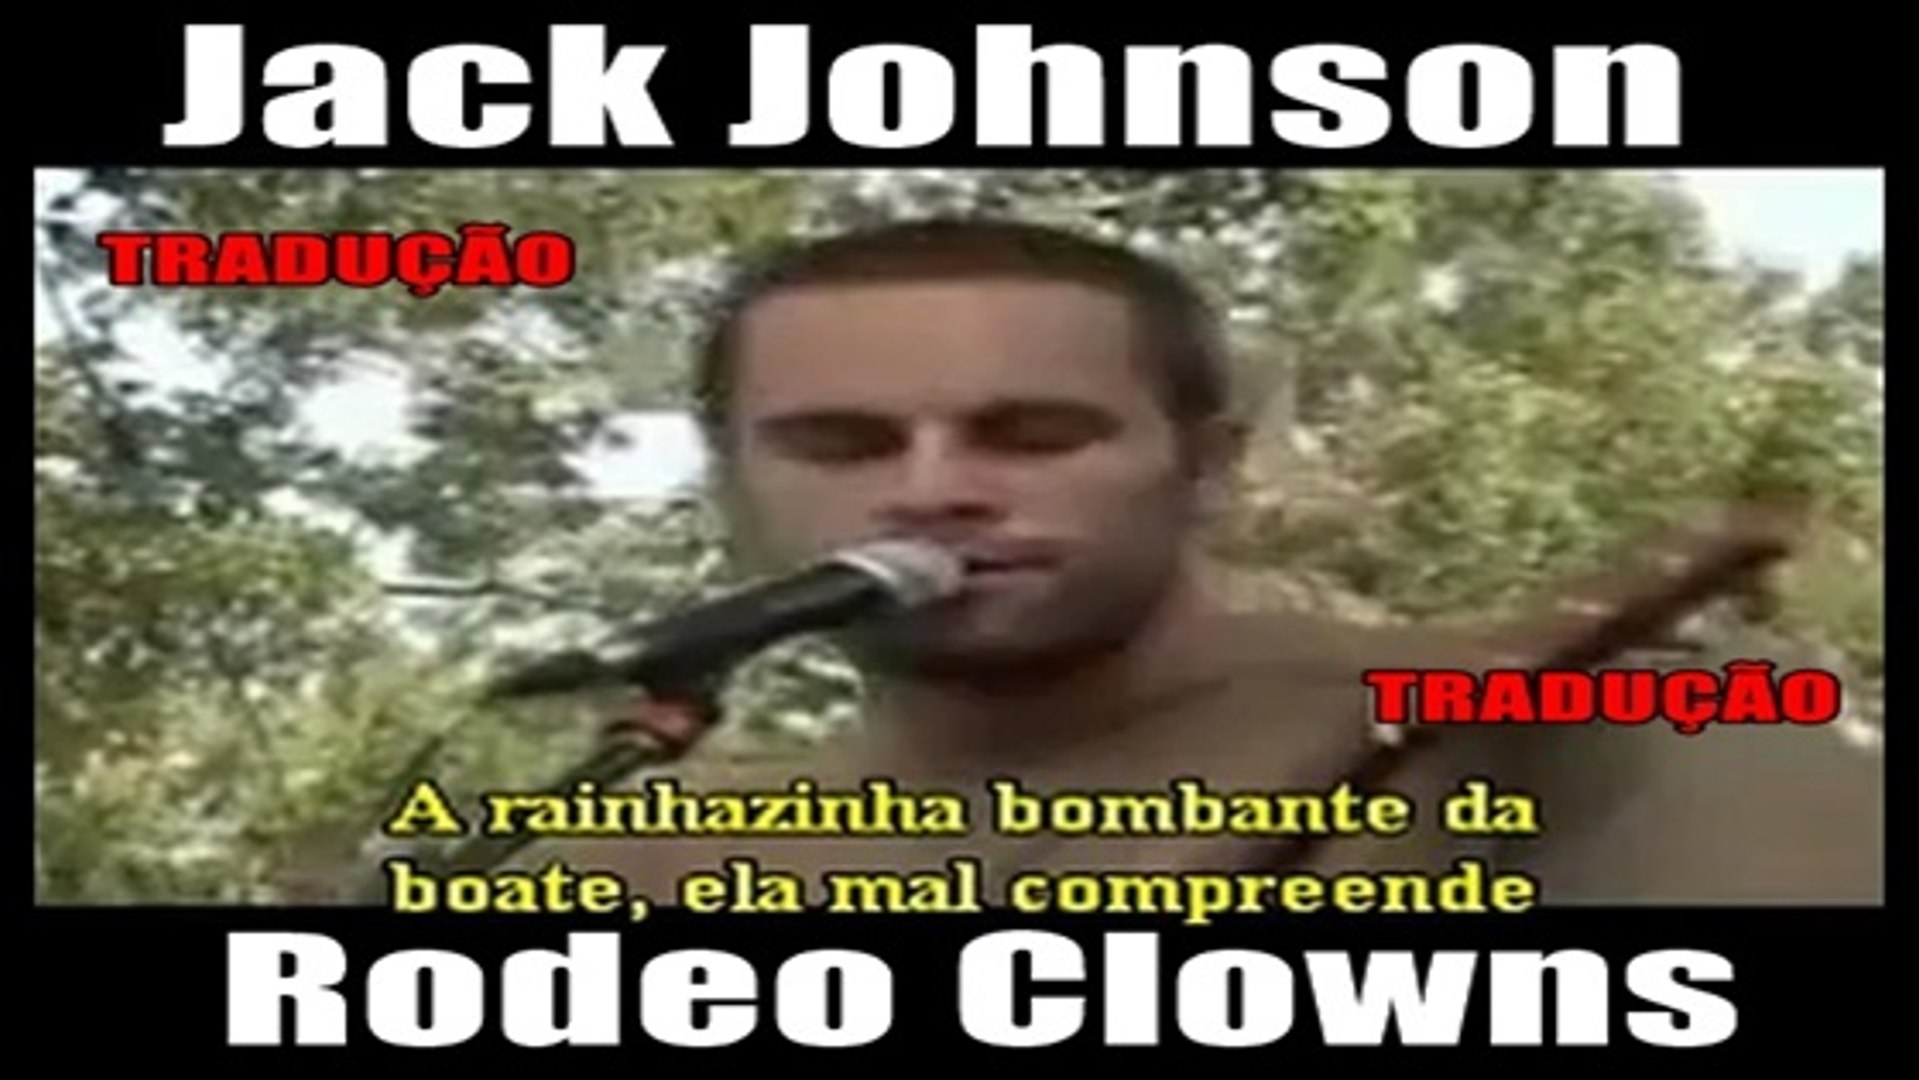 ⁣Jack Johnson - Rodeo clowns - legendado